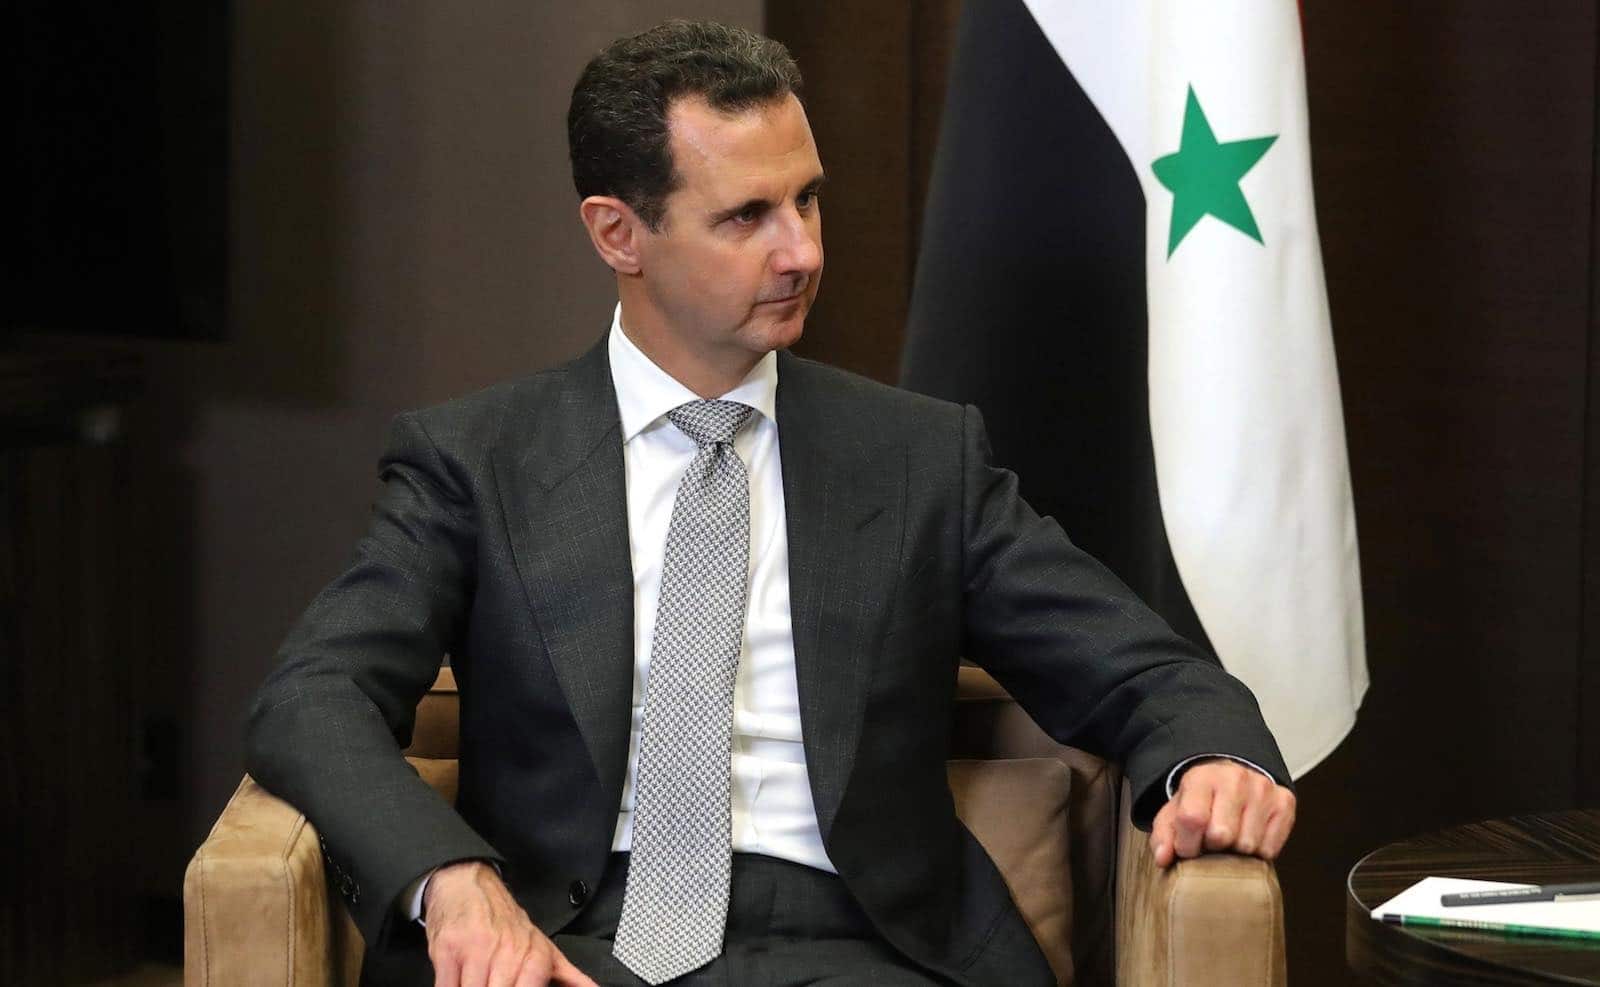 Giace inquieta la testa di Assad